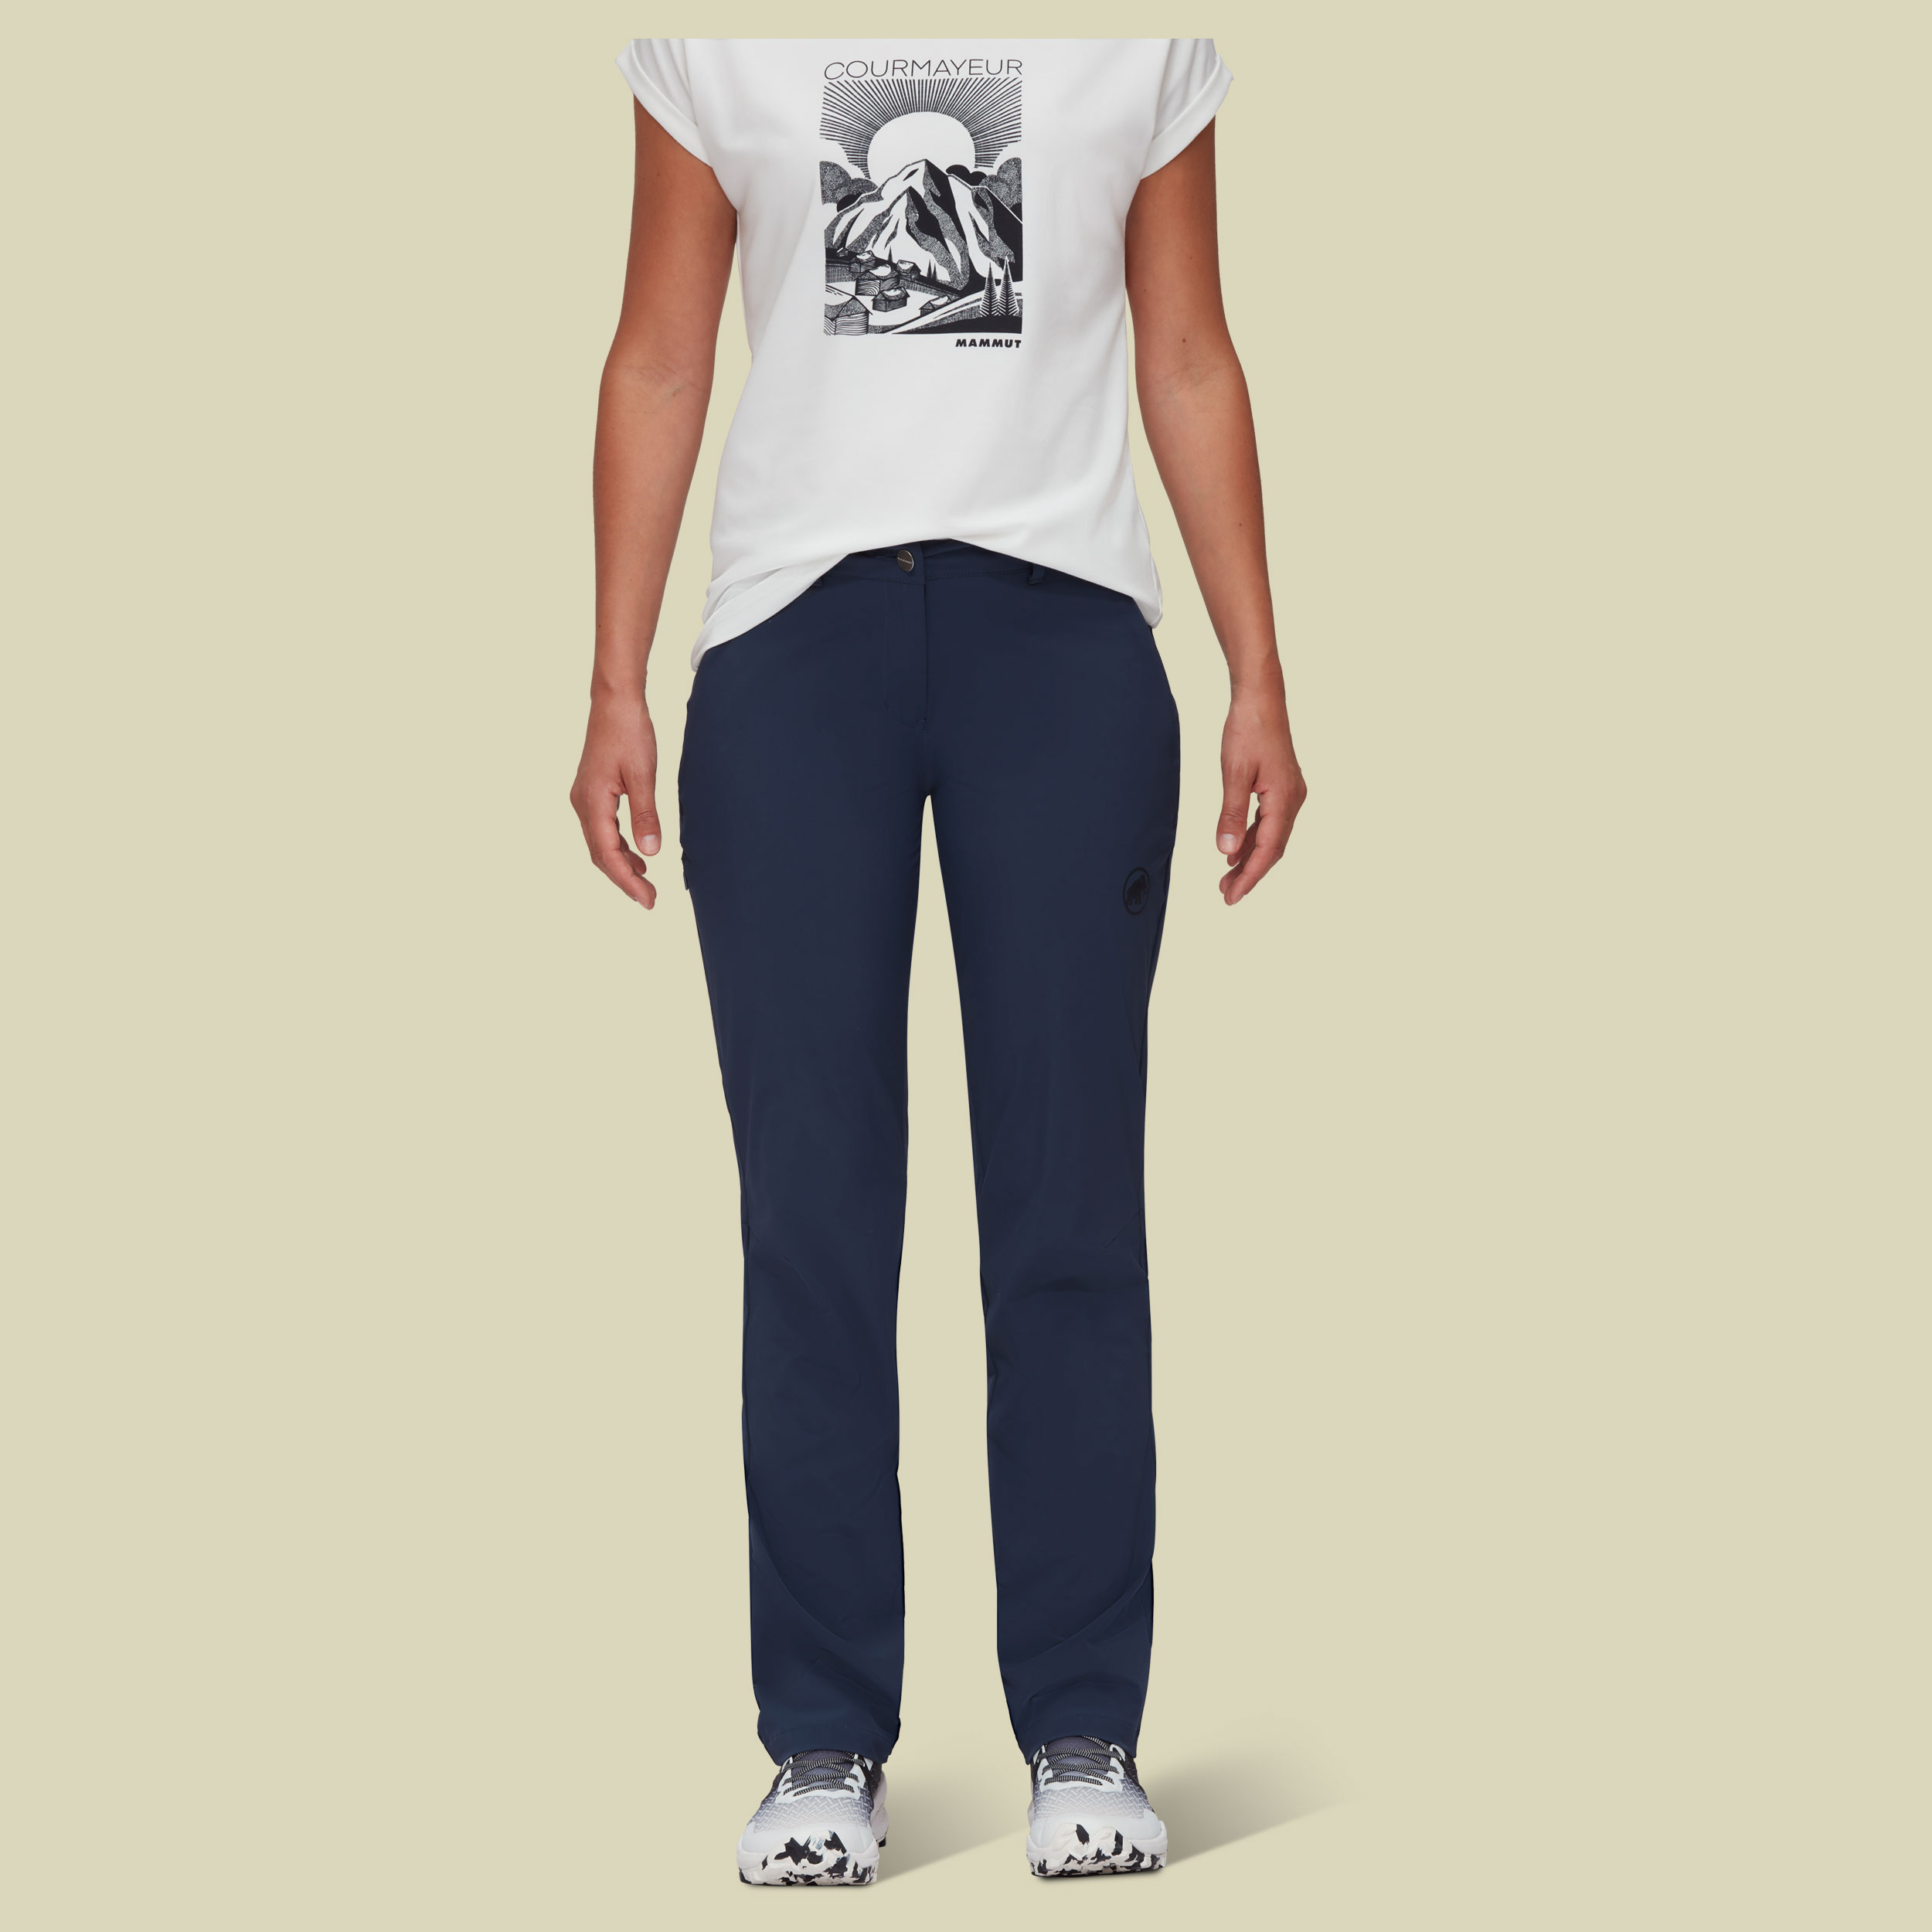 Runbold Pants Women Größe 36-short Farbe marine